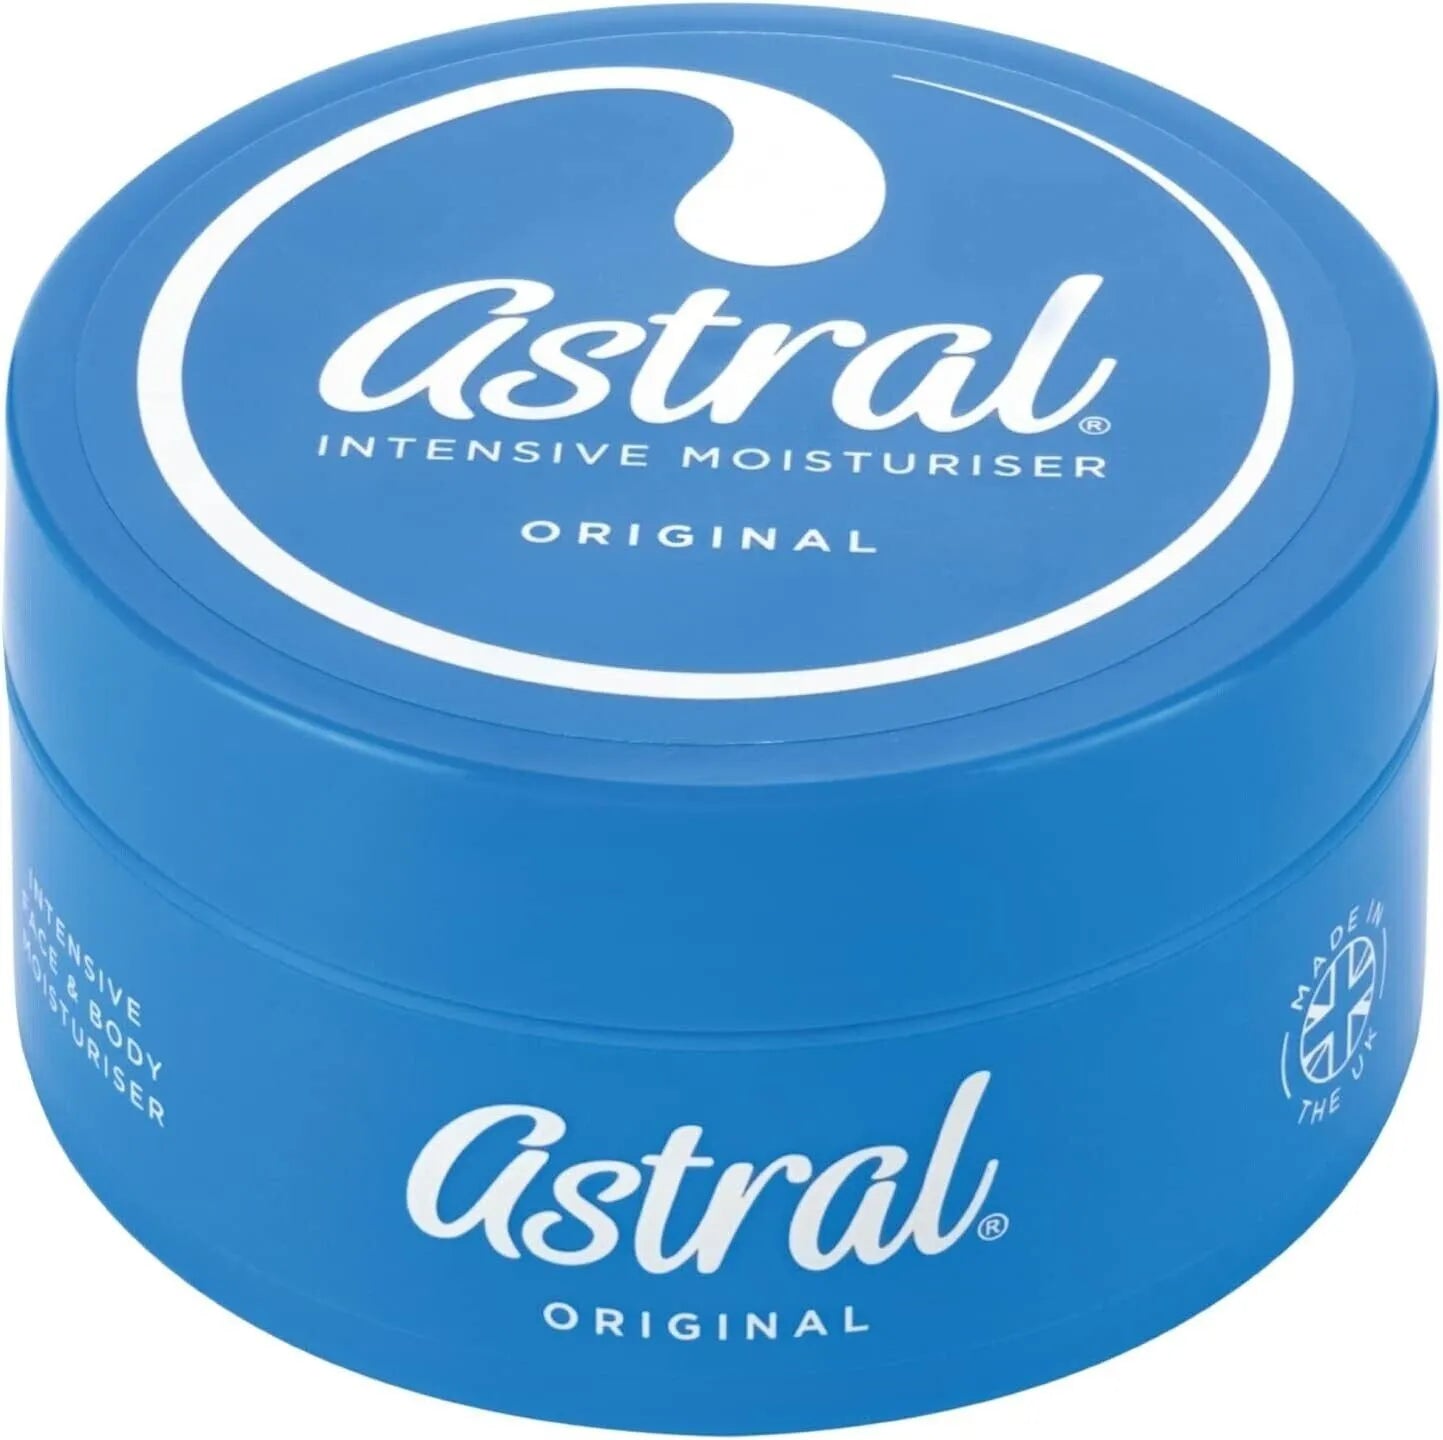 Astral Original Face & Body Intensive Moisturiser - Glycerine & petroleum jelly